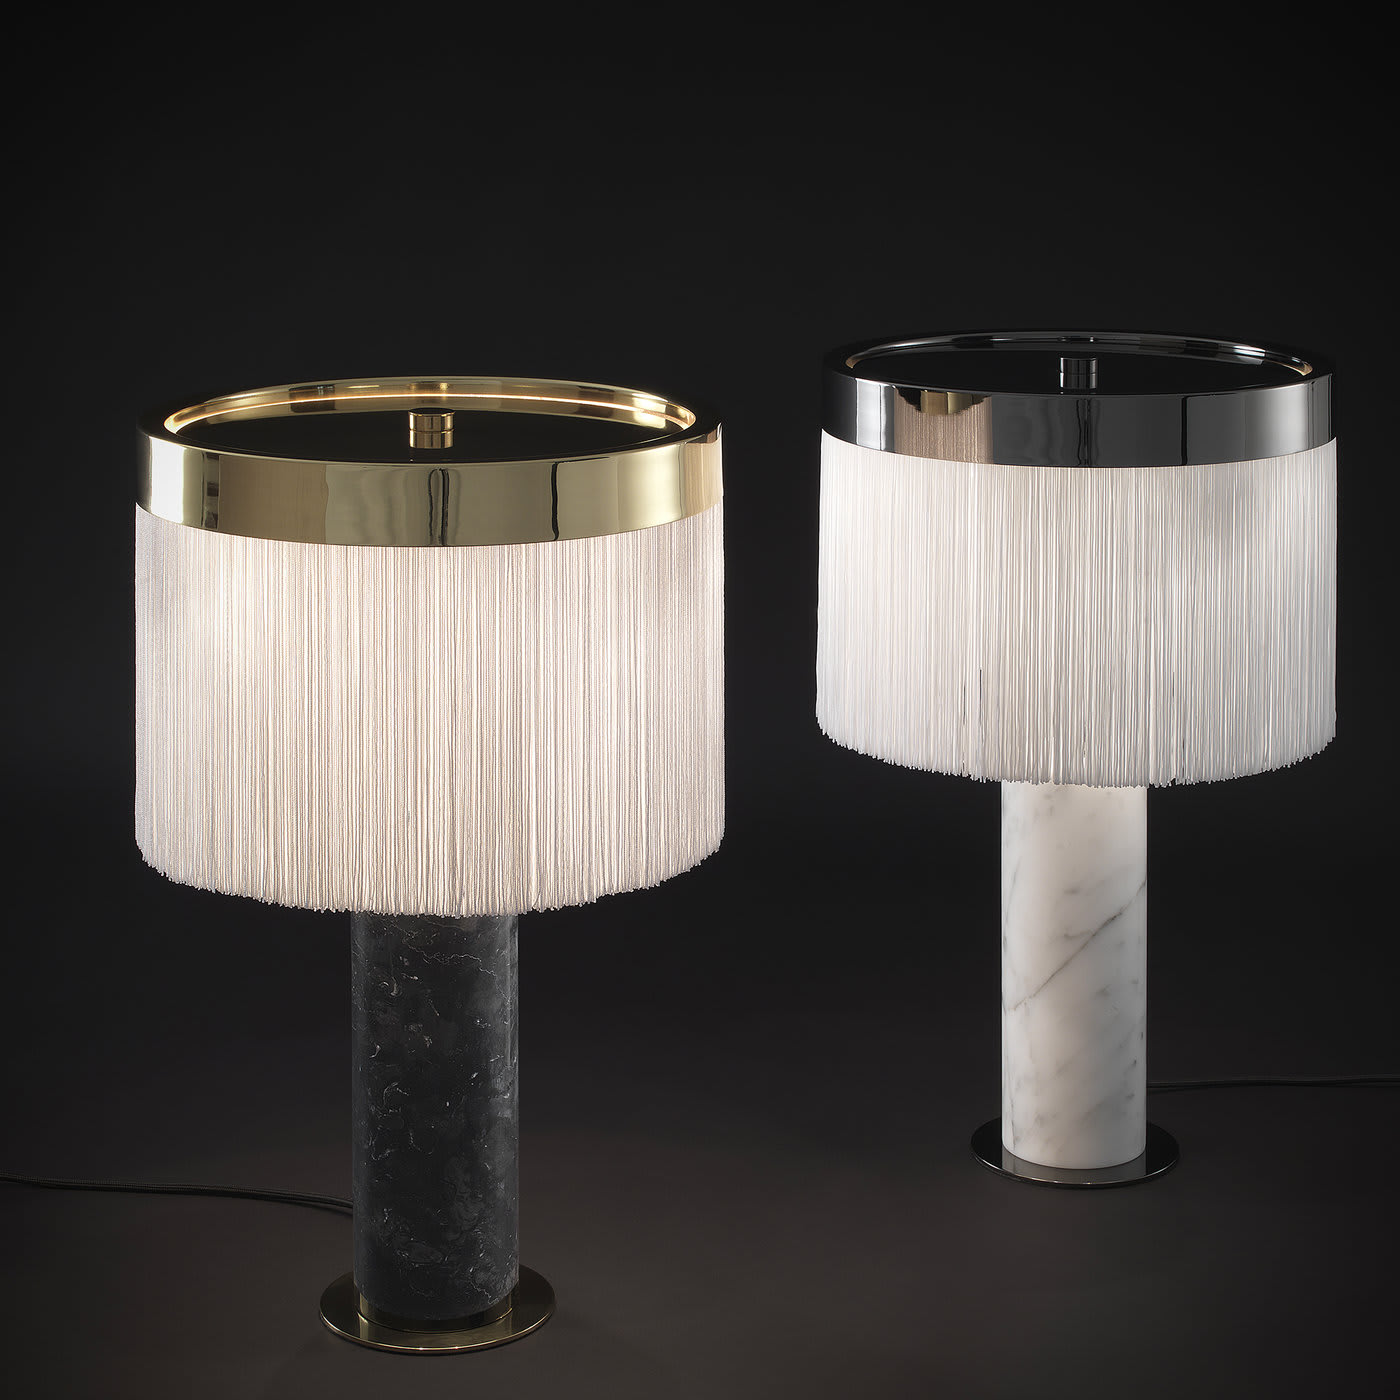 Orsola Black Table Lamp by Bozzoli - Tato